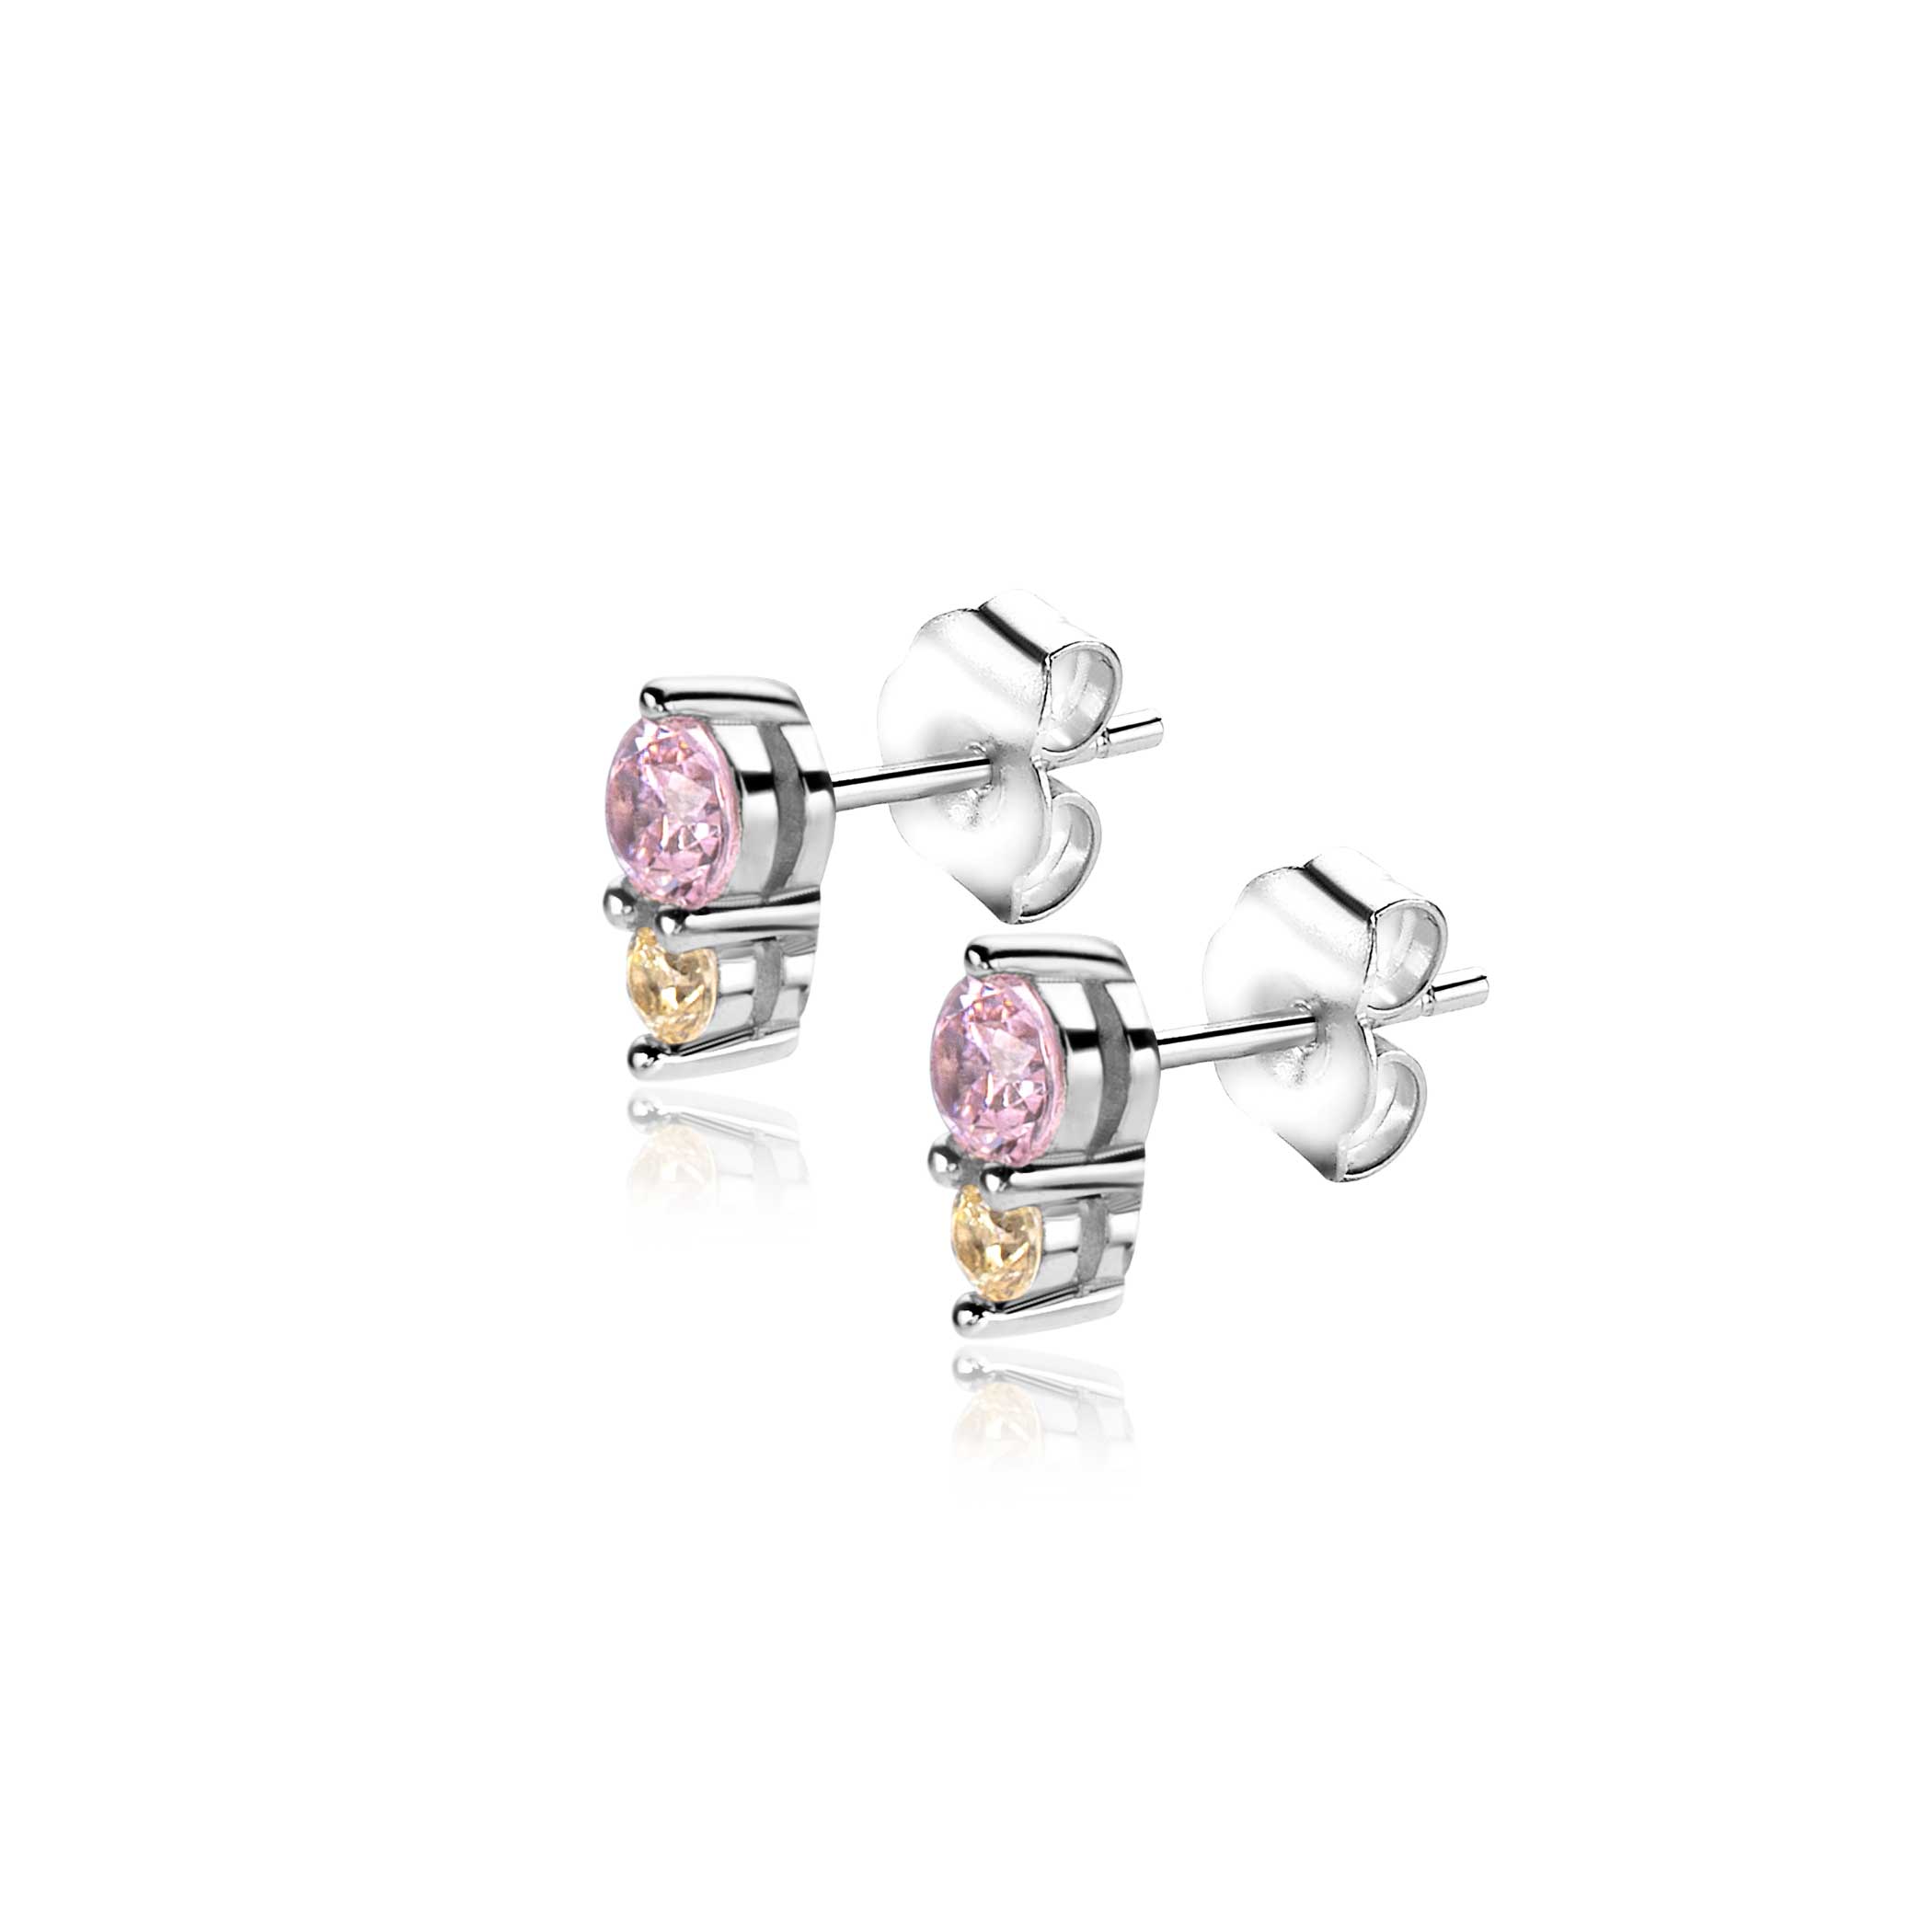 6mm ZINZI Sterling Silver Stud Earrings Round Pink Champagne ZIO2501